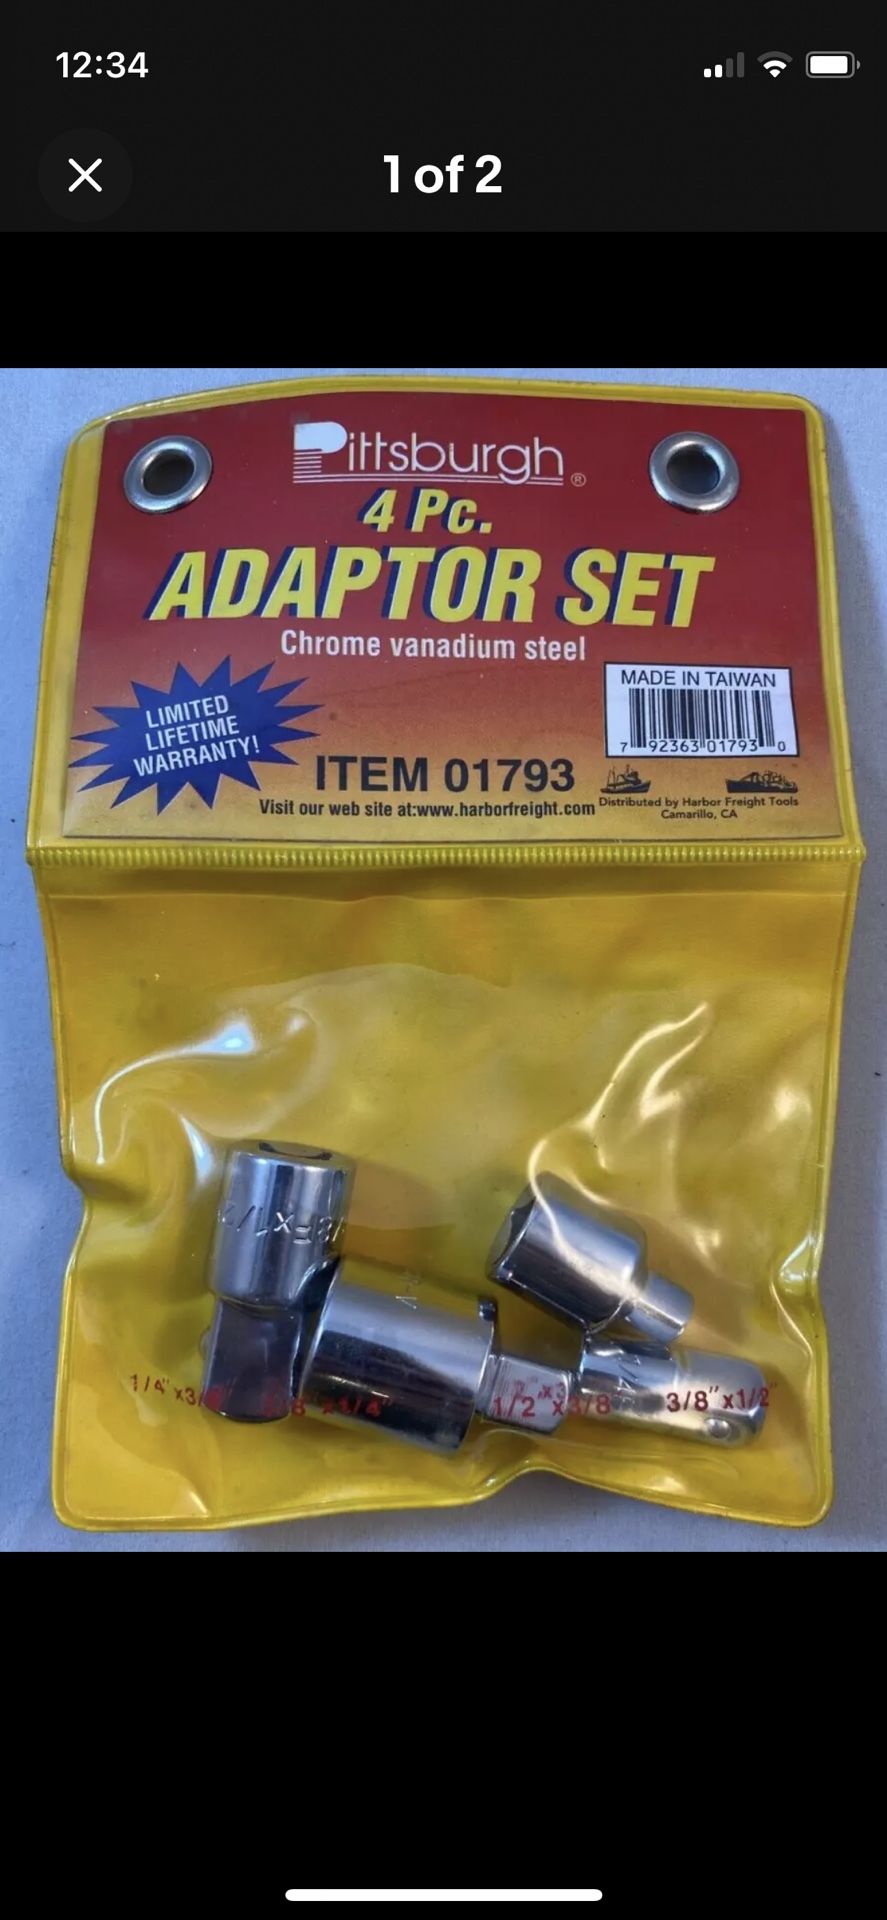 Pittsburg 4pc. Socket Adapter Set 01793 Chrome Vanadium steel NOS